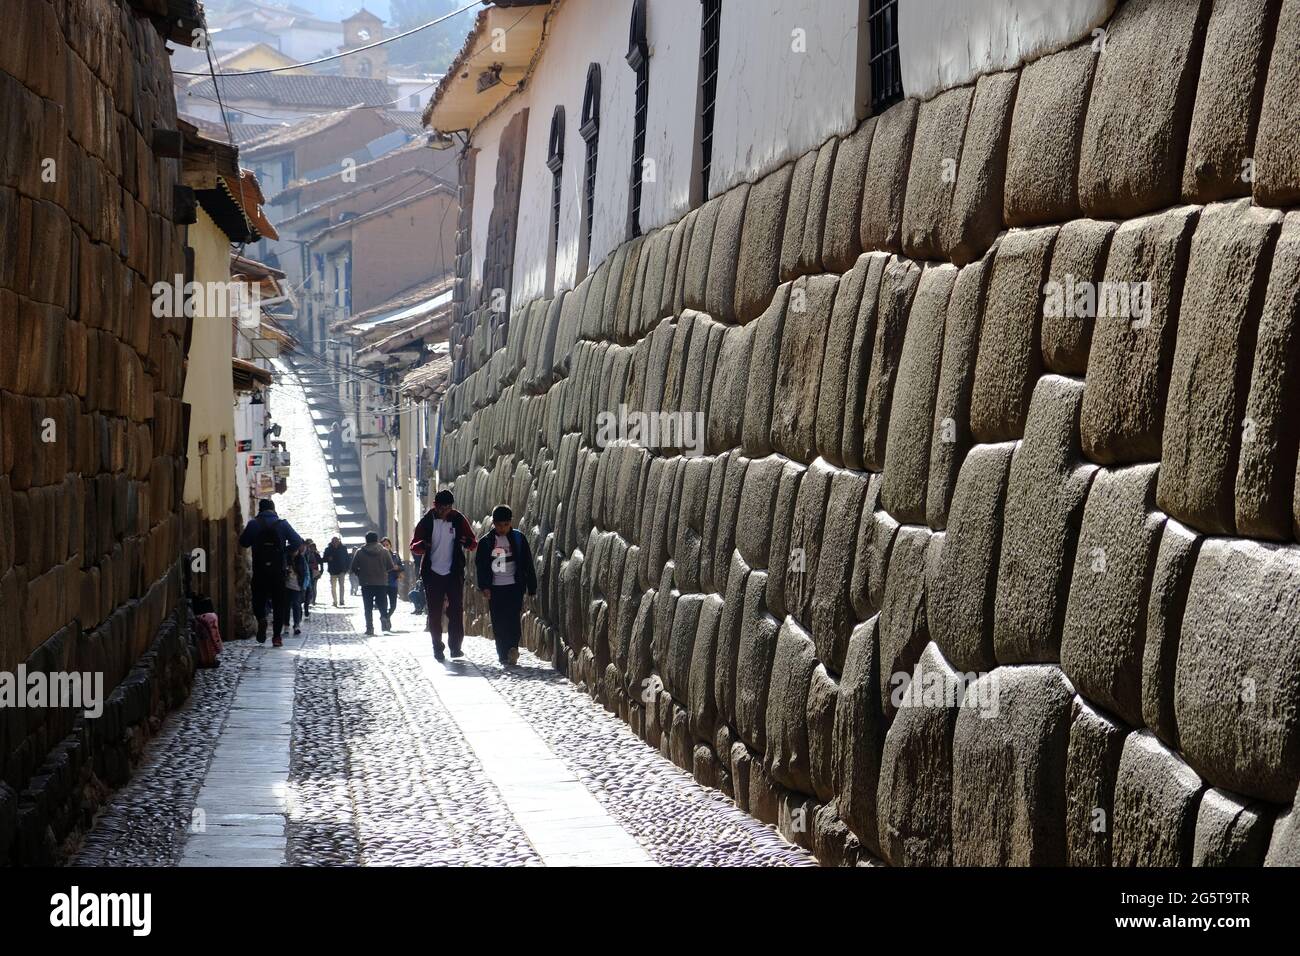 Peru Cusco - Piedra de los 12 angulos - Twelve Angled Stone Wall Street view Stockfoto